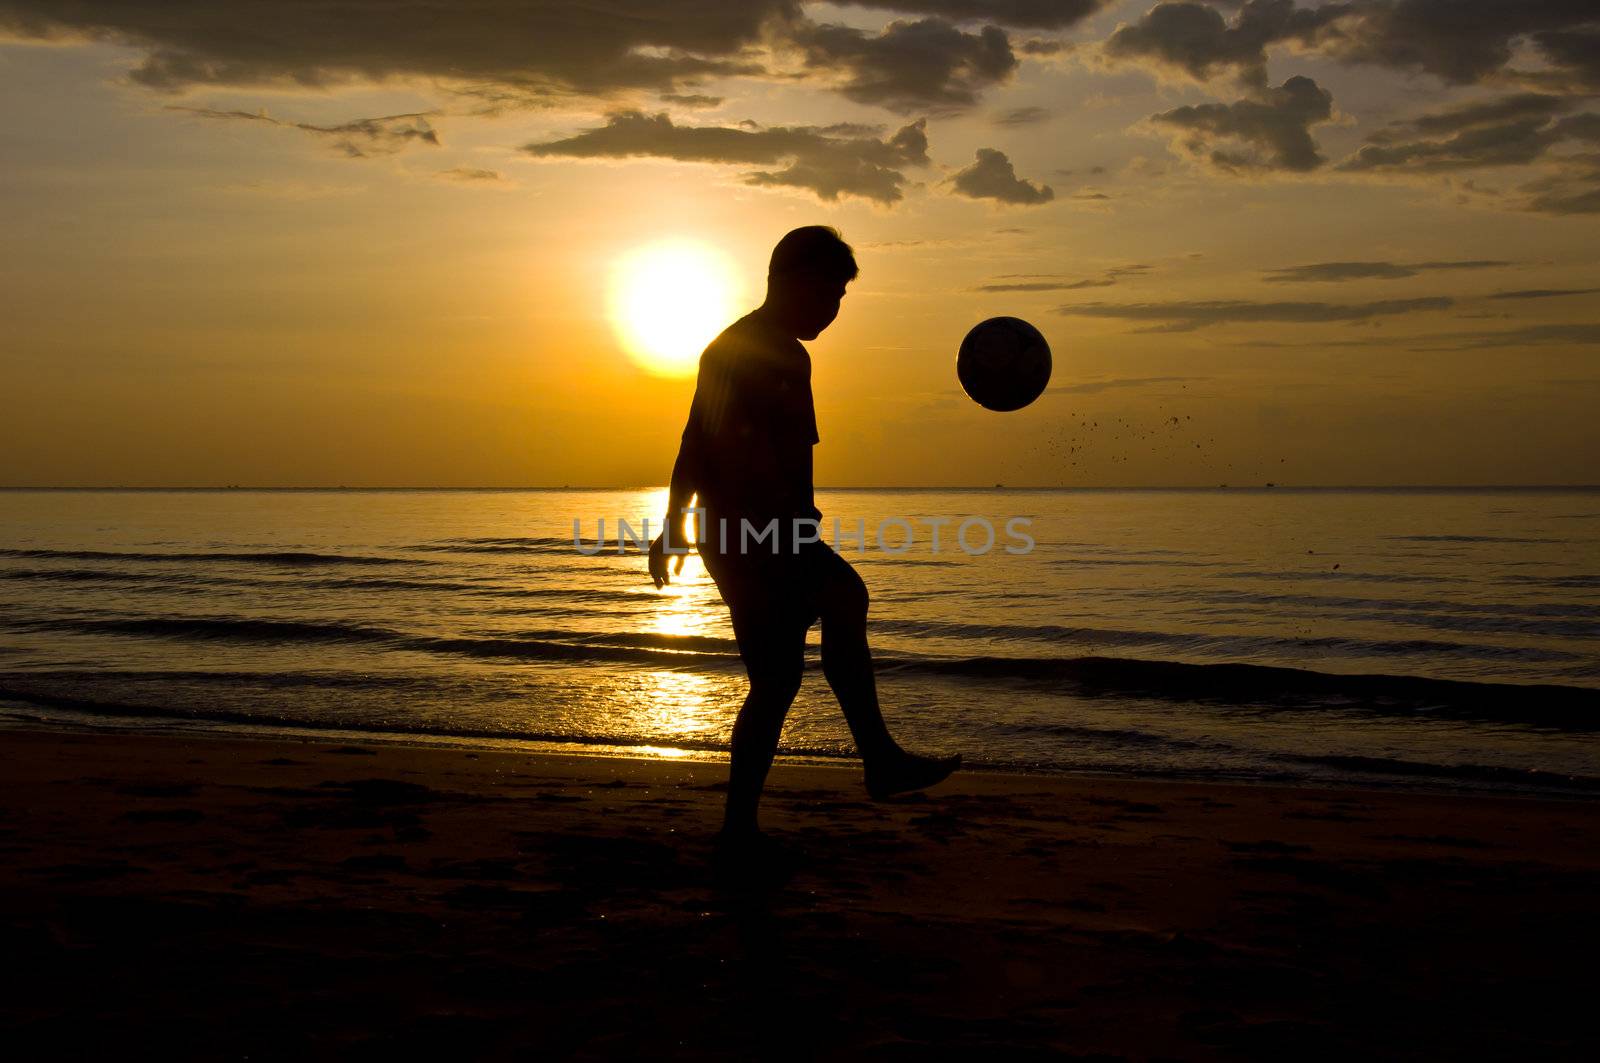 Beach soccer by buffaloboy